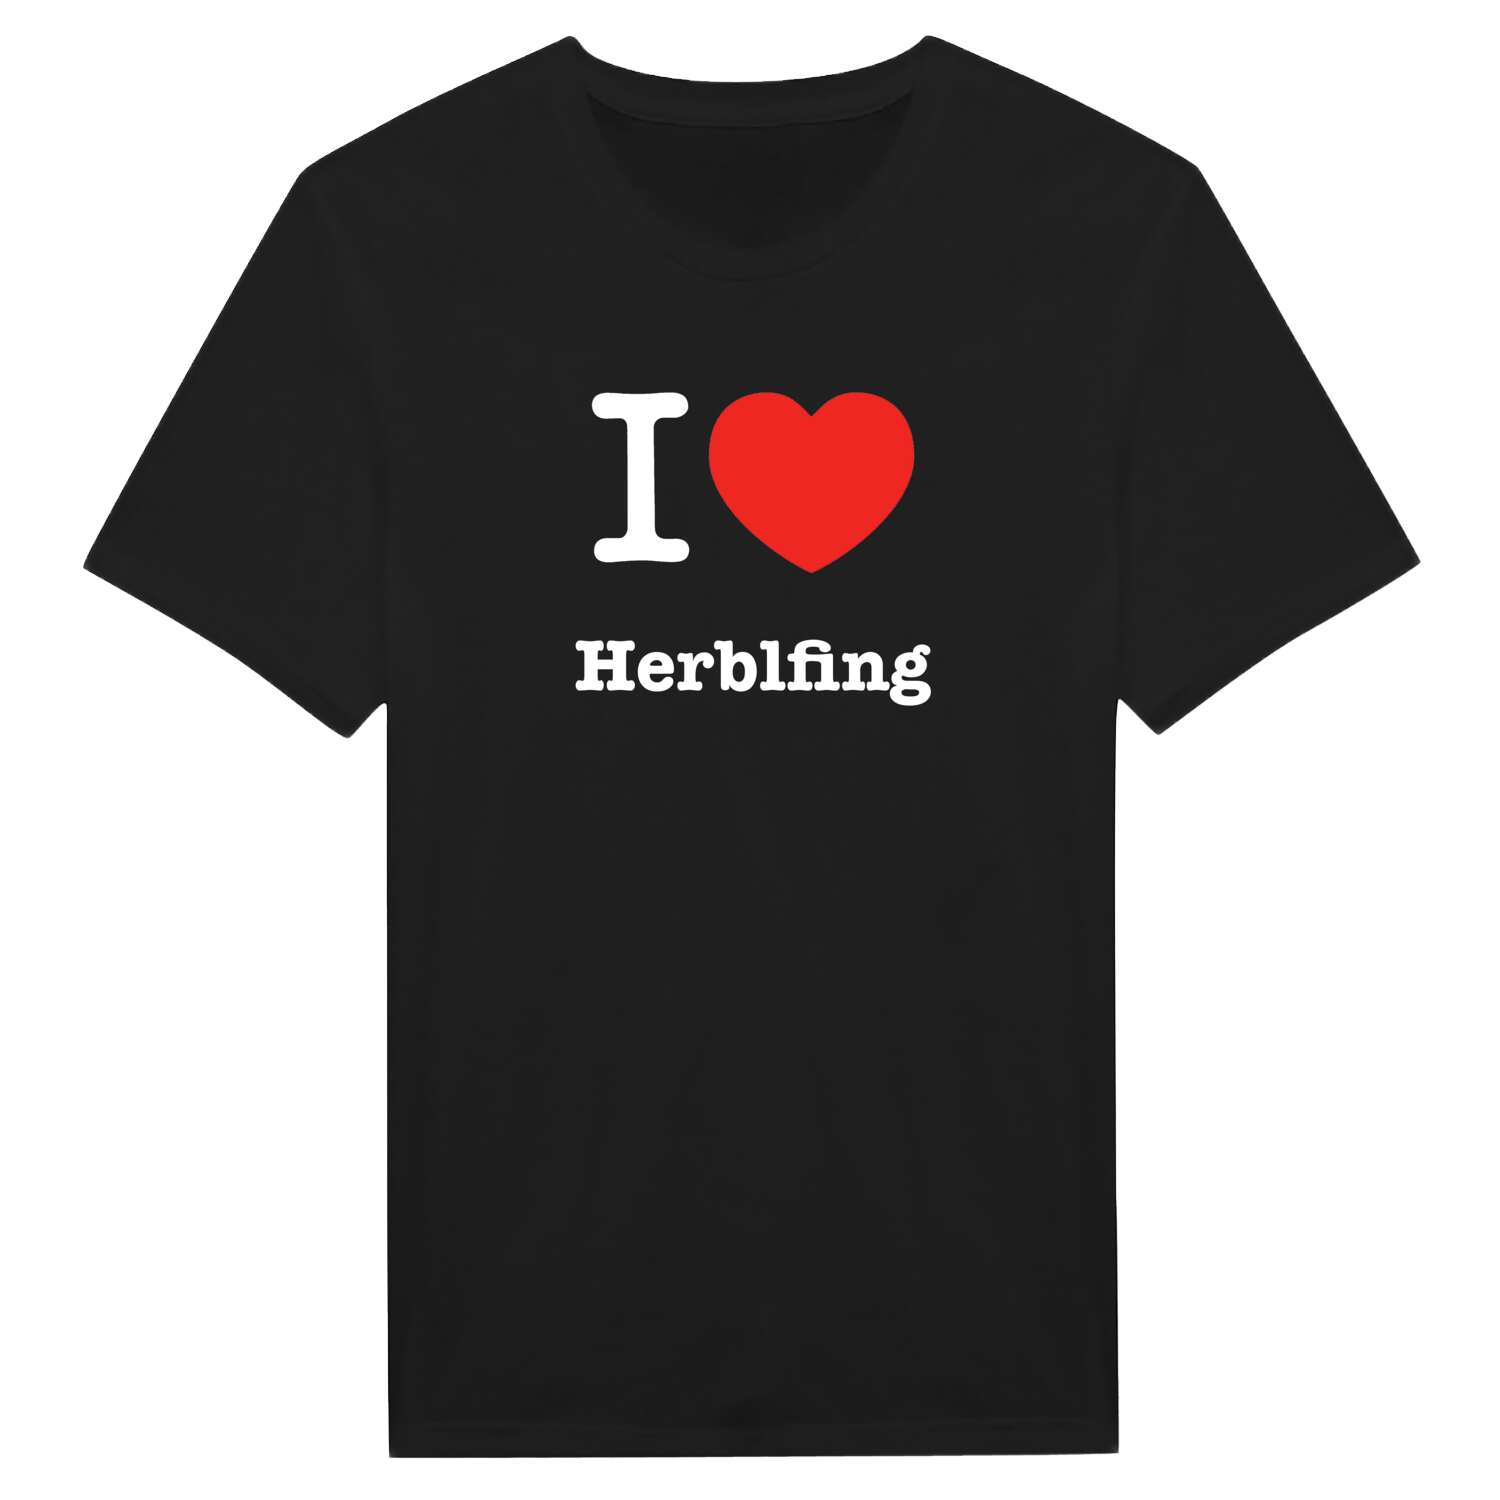 Herblfing T-Shirt »I love«